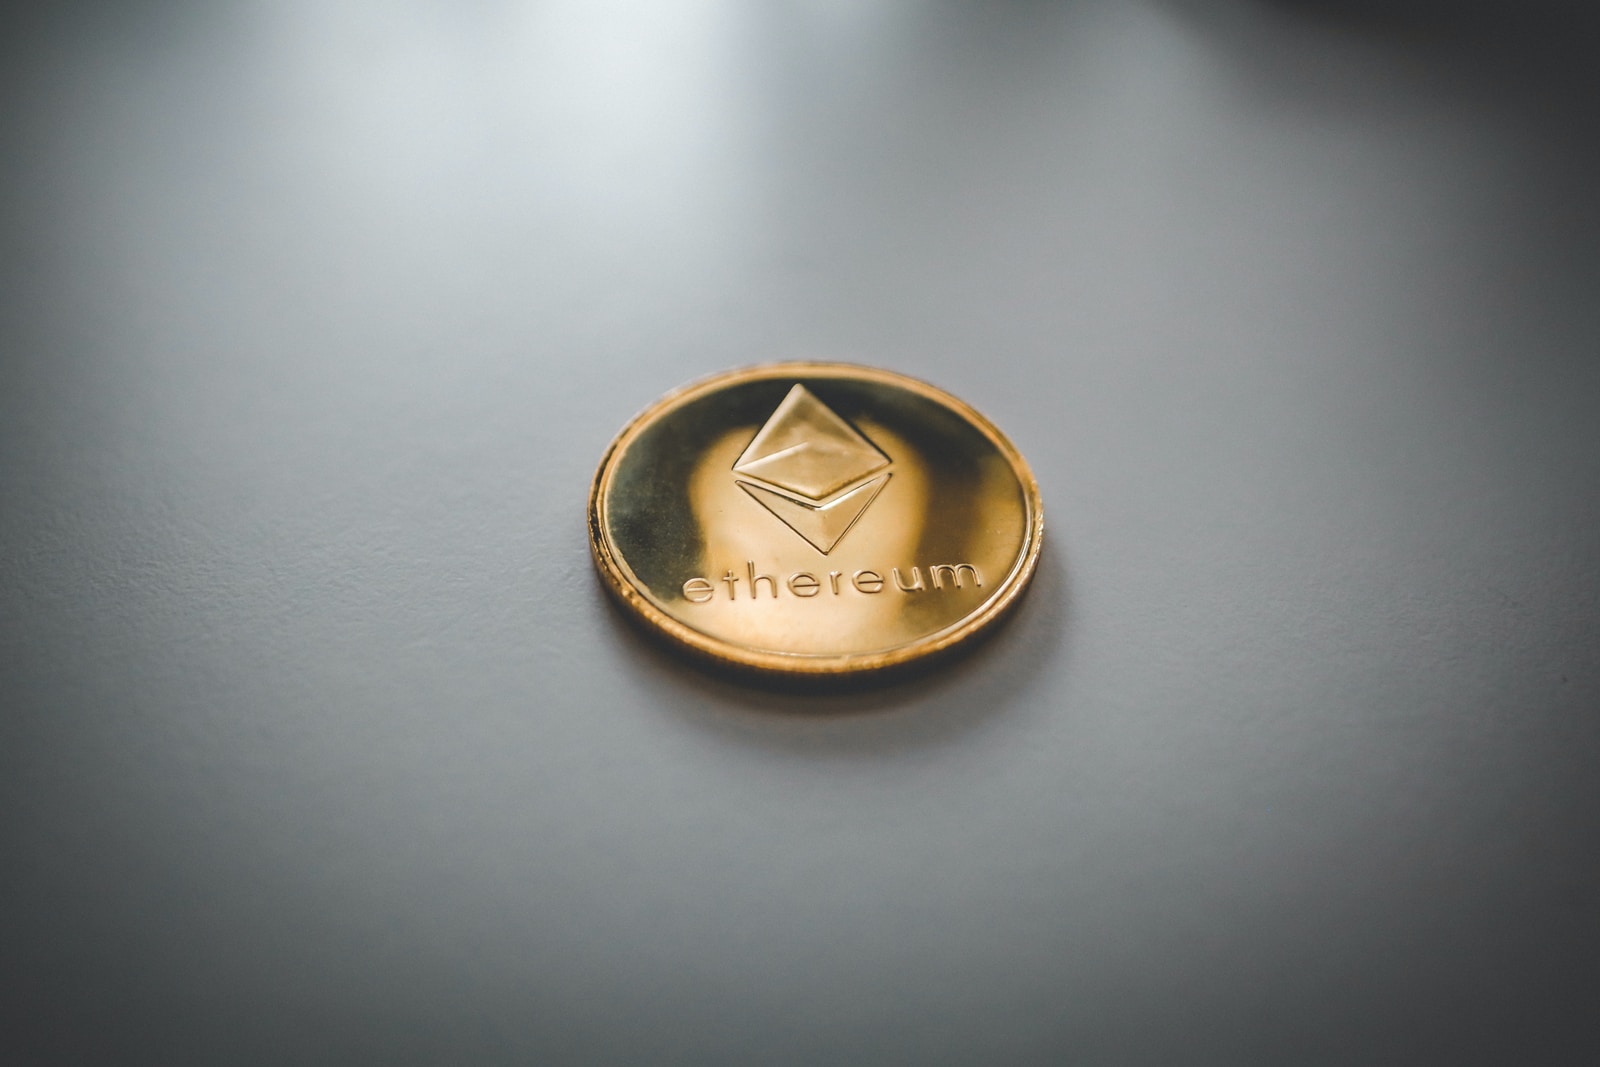 ethereum gold and black round emblem